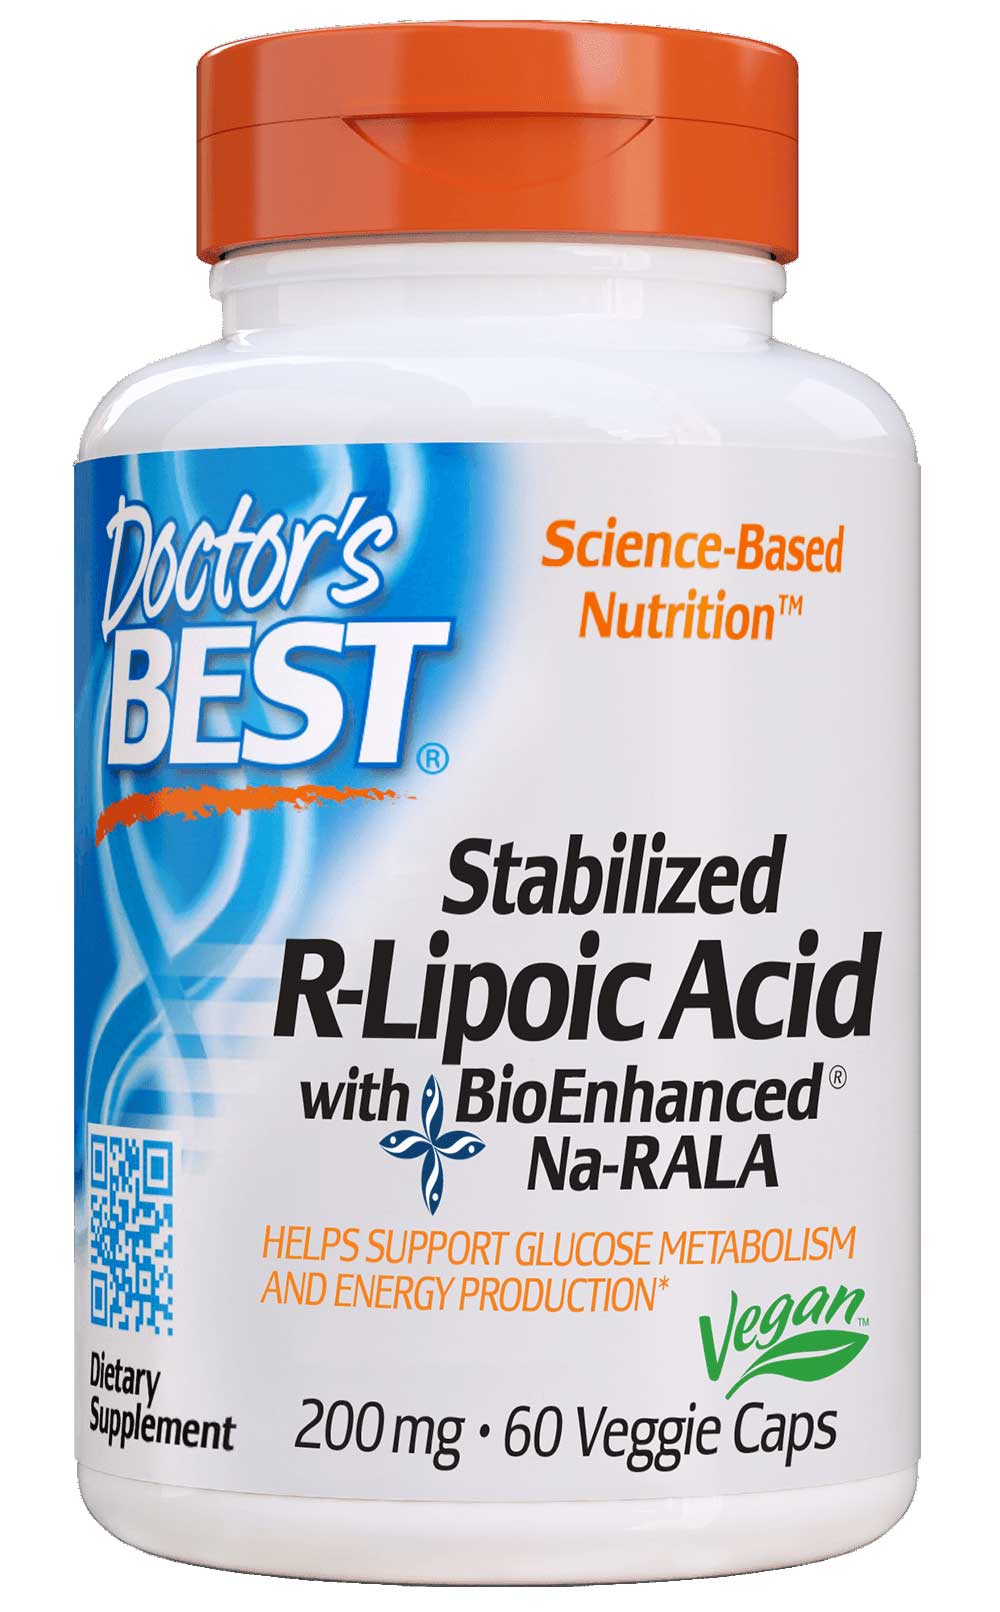 Doctor's Best Stabilized R-Lipoic Acid with BioEnhanced Na-RALA 200 mg